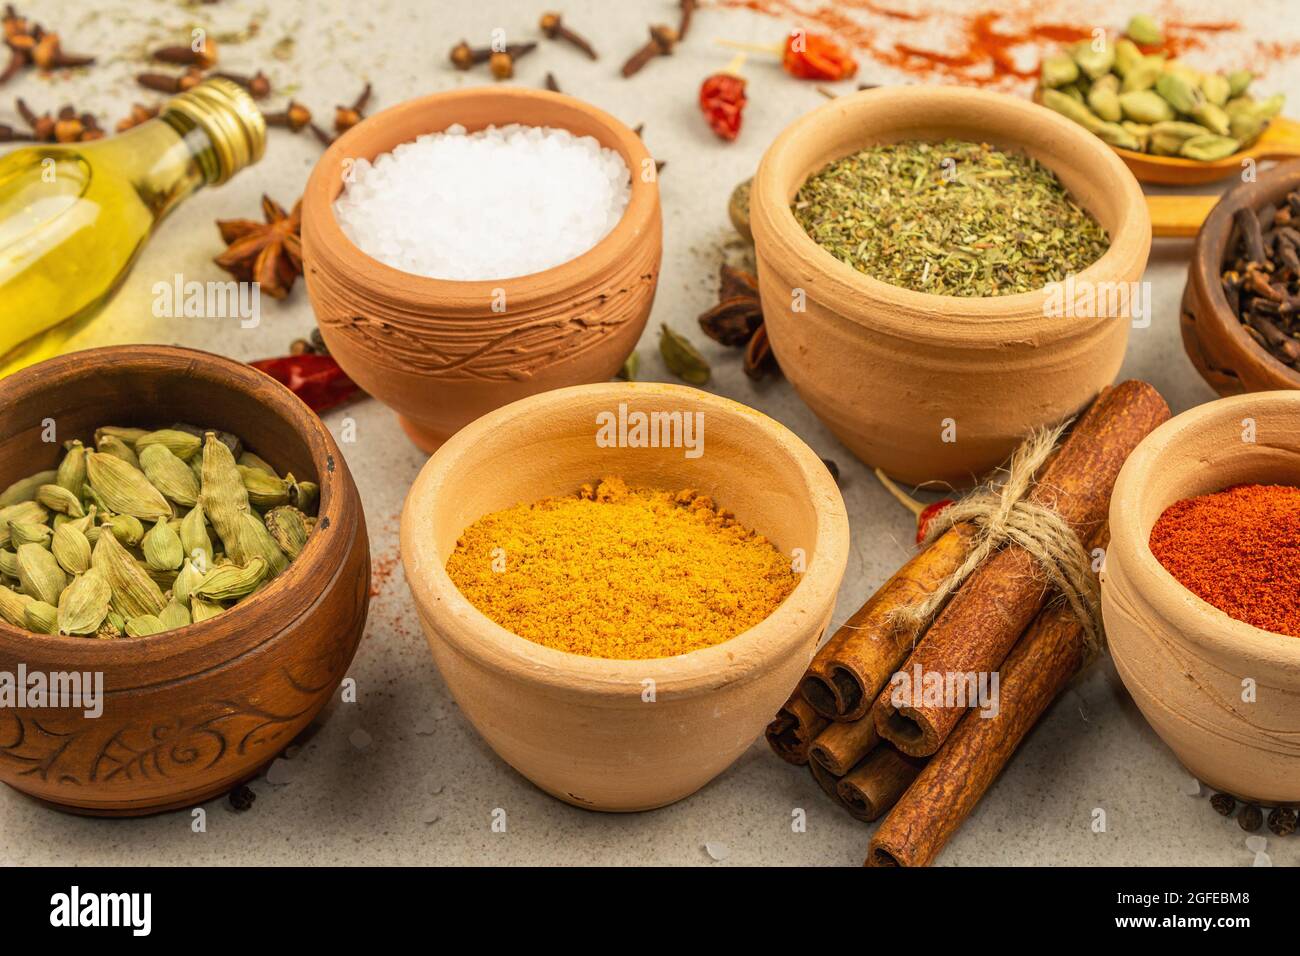 Un juego de especias para cocinar curry. Condimentos aromáticos